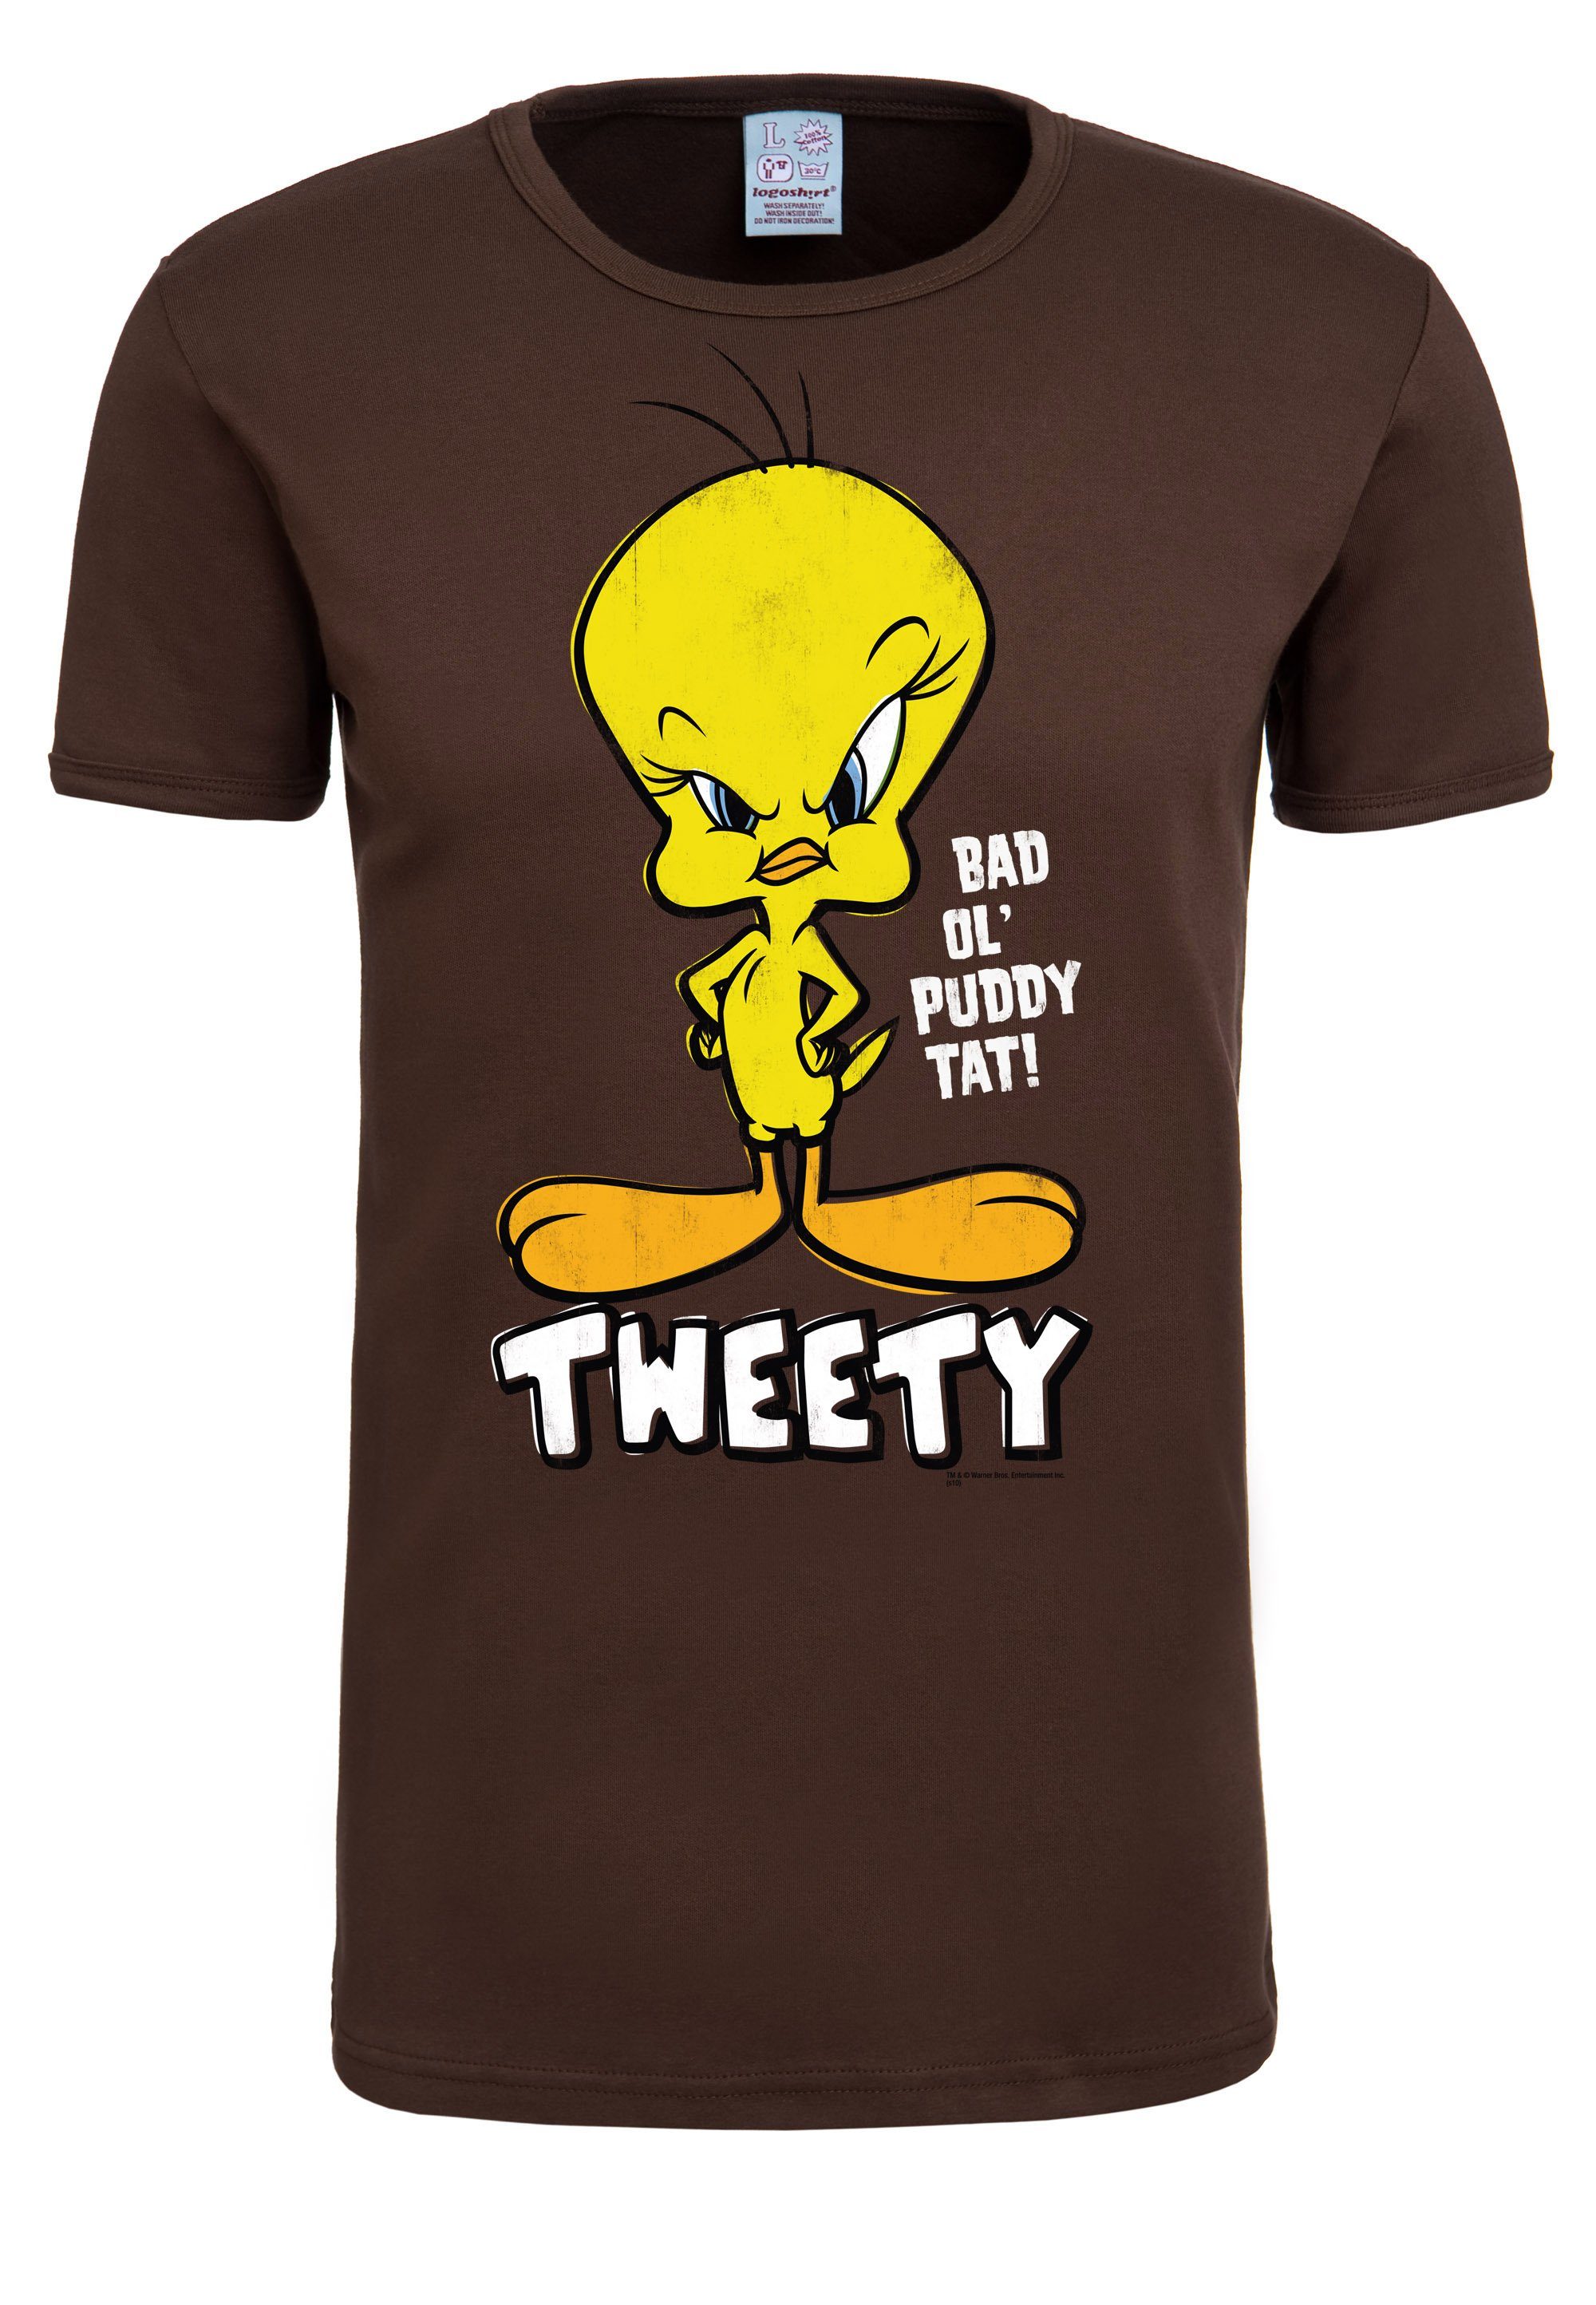 Tweety mit Tunes - Tweety-Frontprint LOGOSHIRT Looney T-Shirt